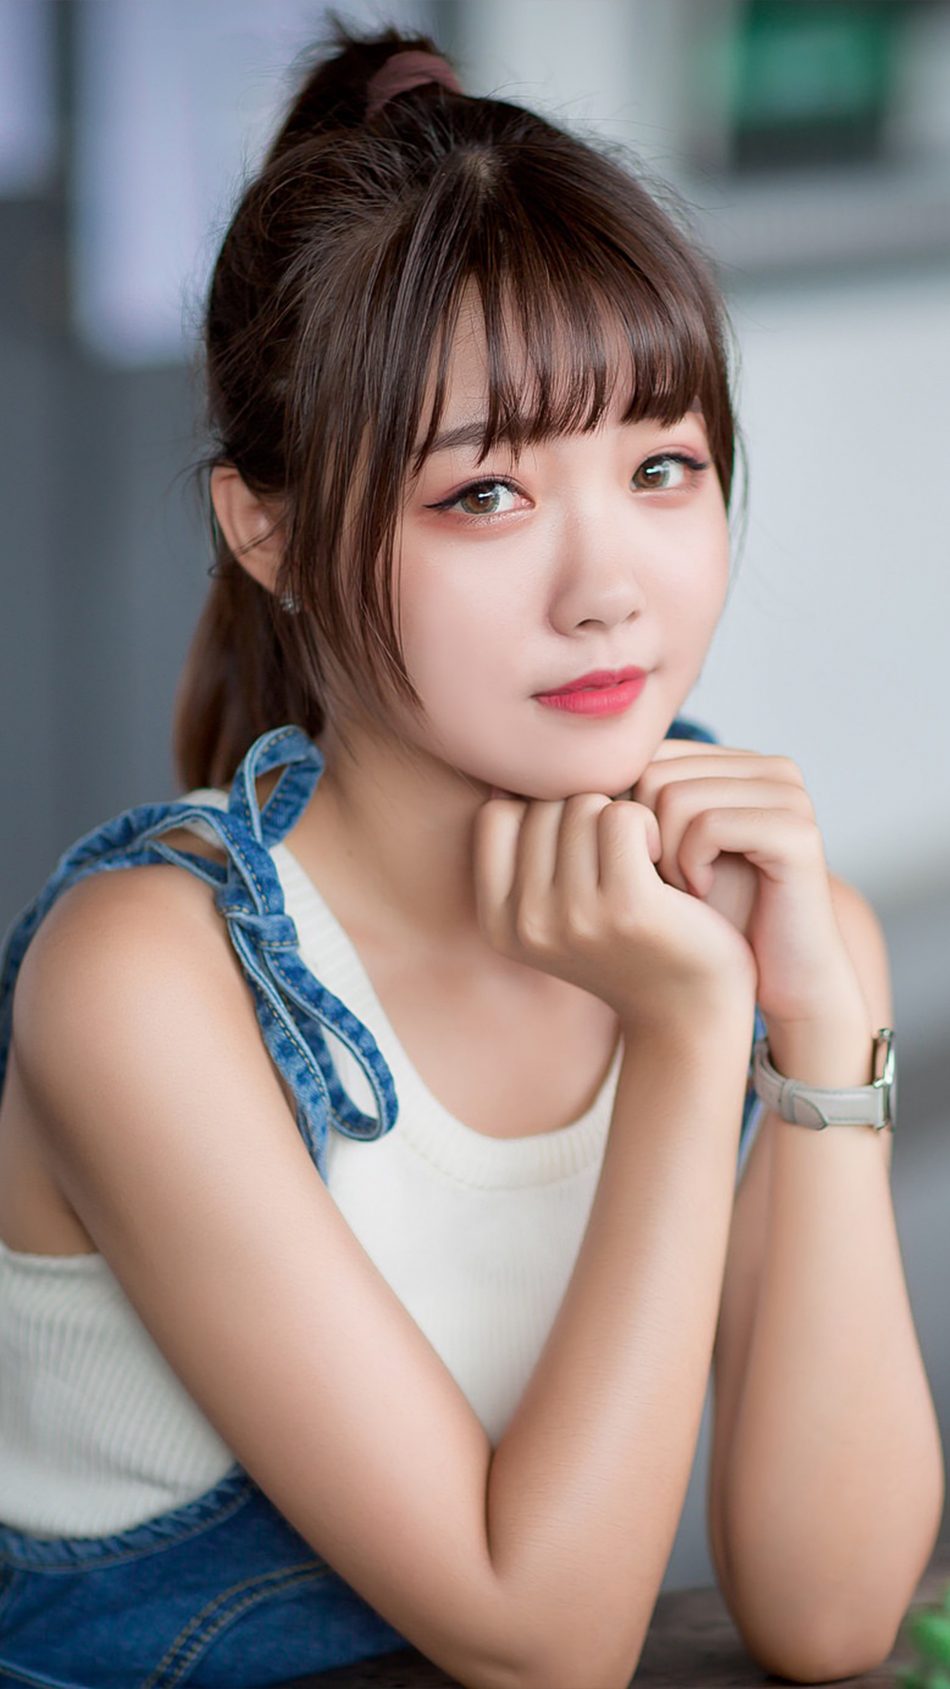 Cute Adorable Asian Girl Photography 4k Ultra Hd Mobile Wallpaper 8505